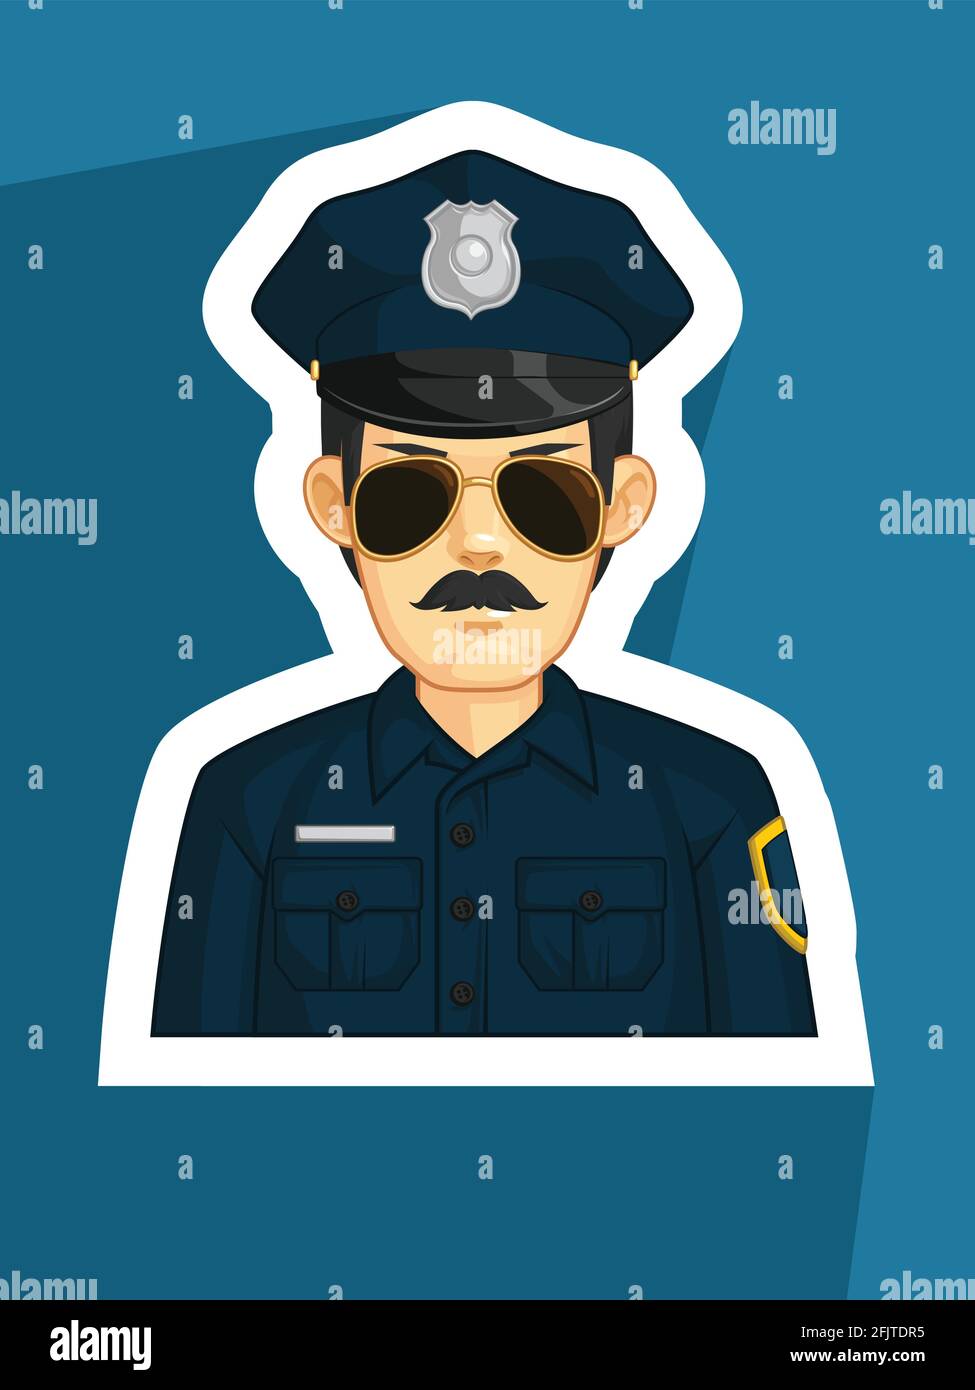 Mascot Police Law Enforcement Officer Profile Avatar Cartoon Vector Stock Vector